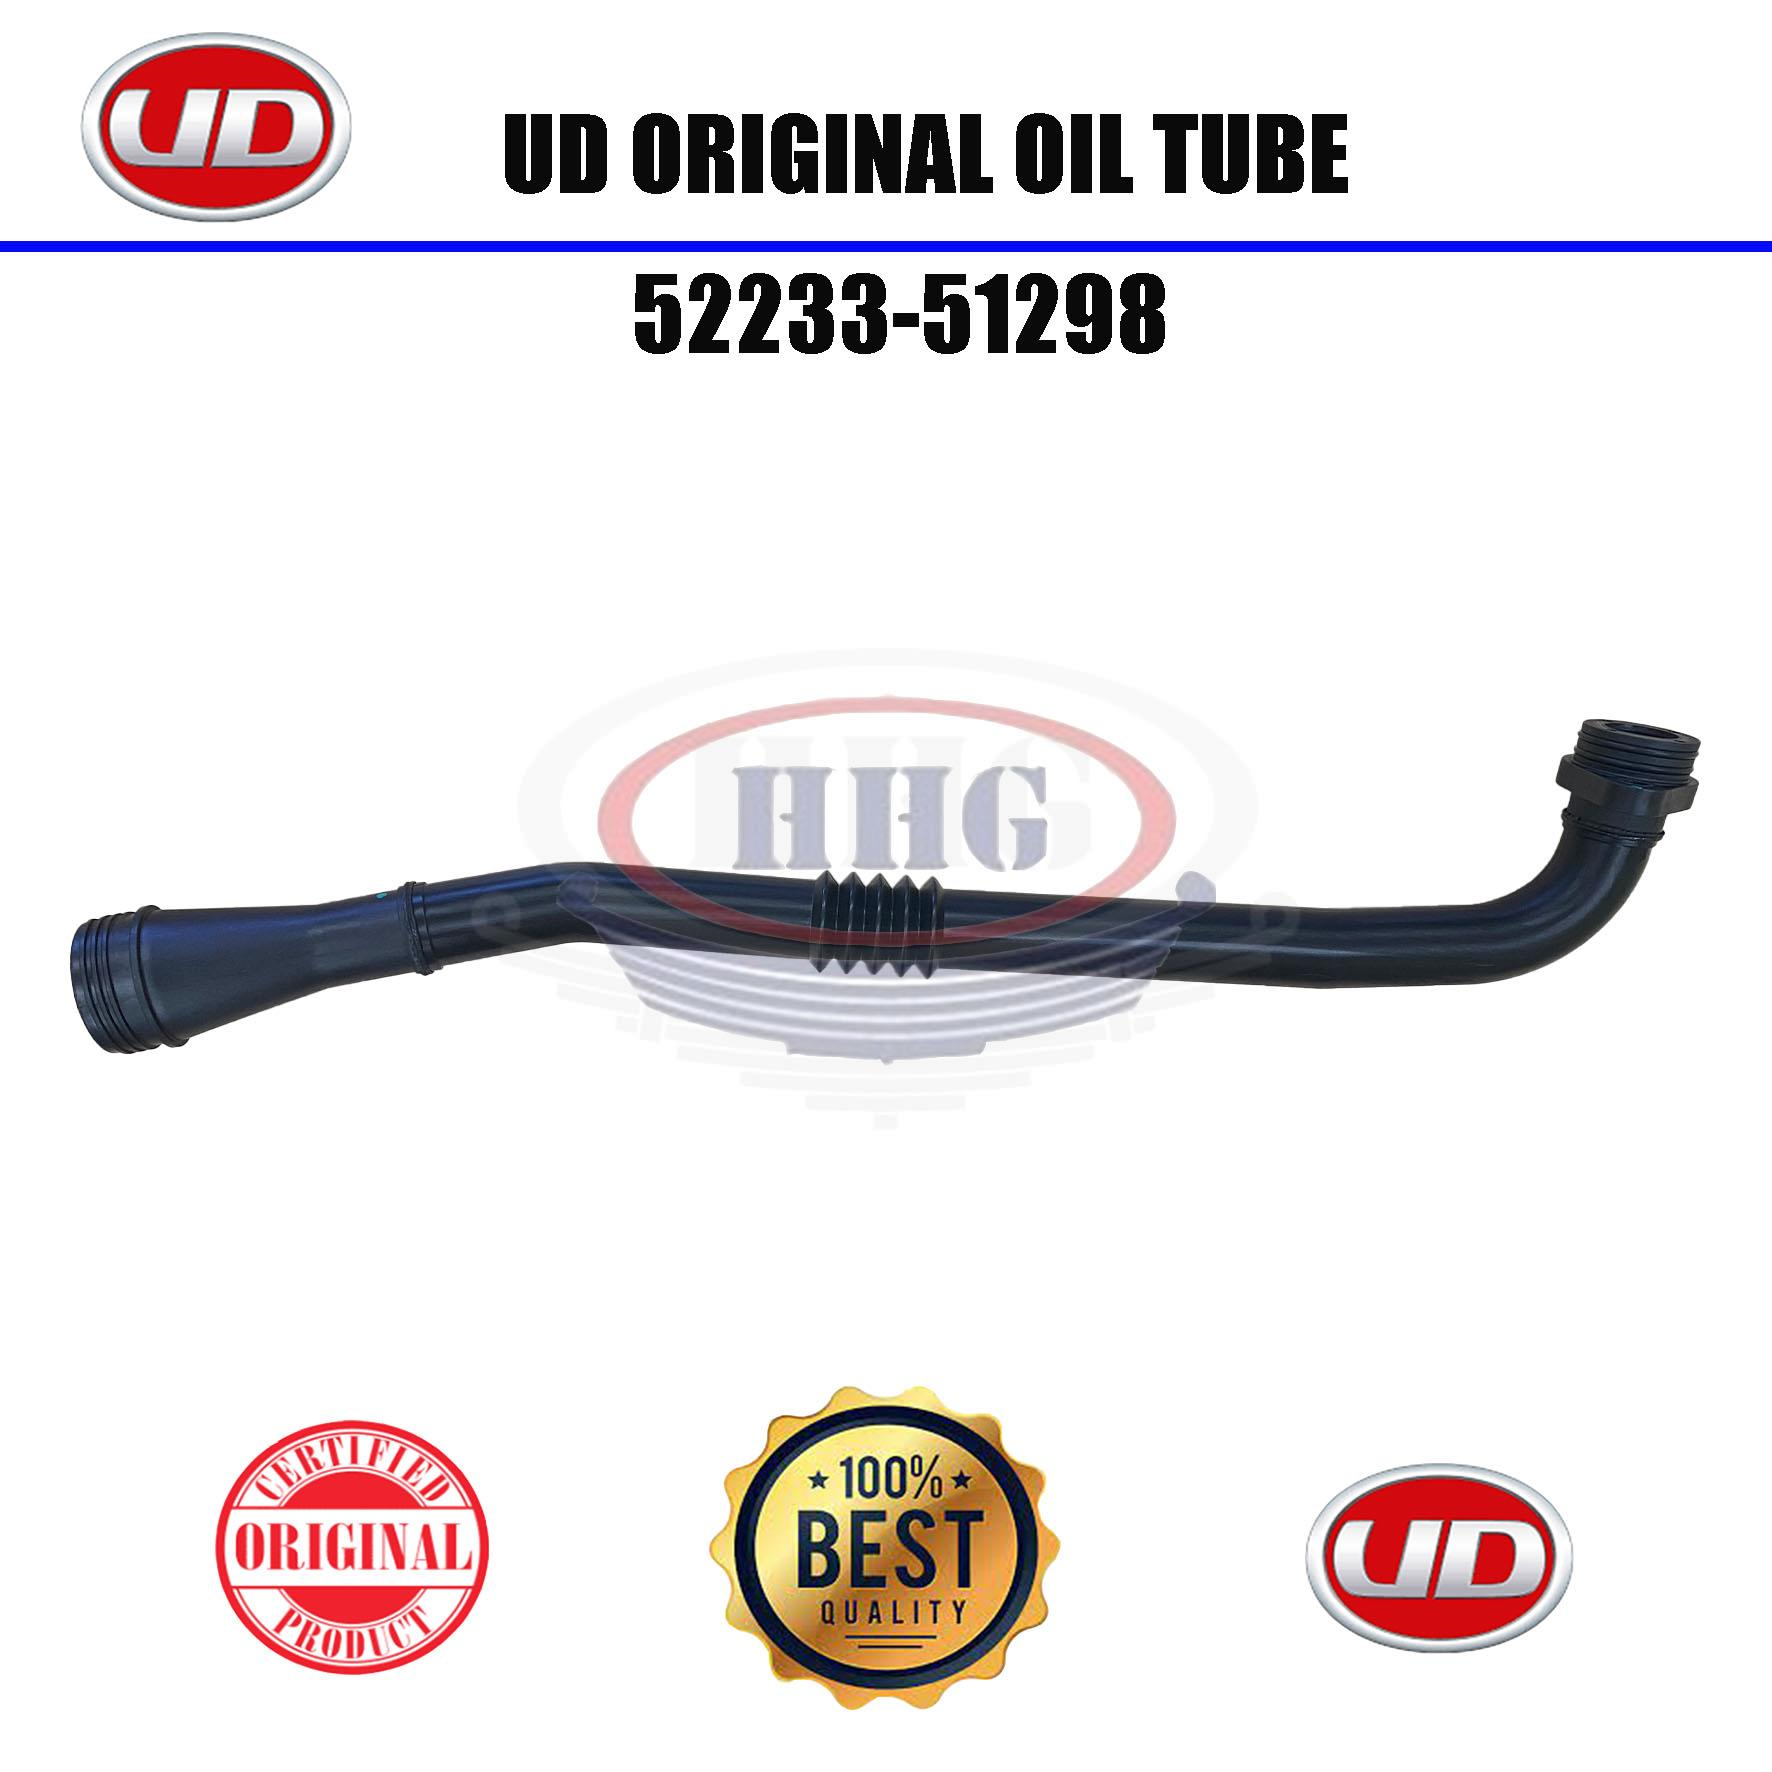 UD Original PKE250 Oil Tube (52233-51298)